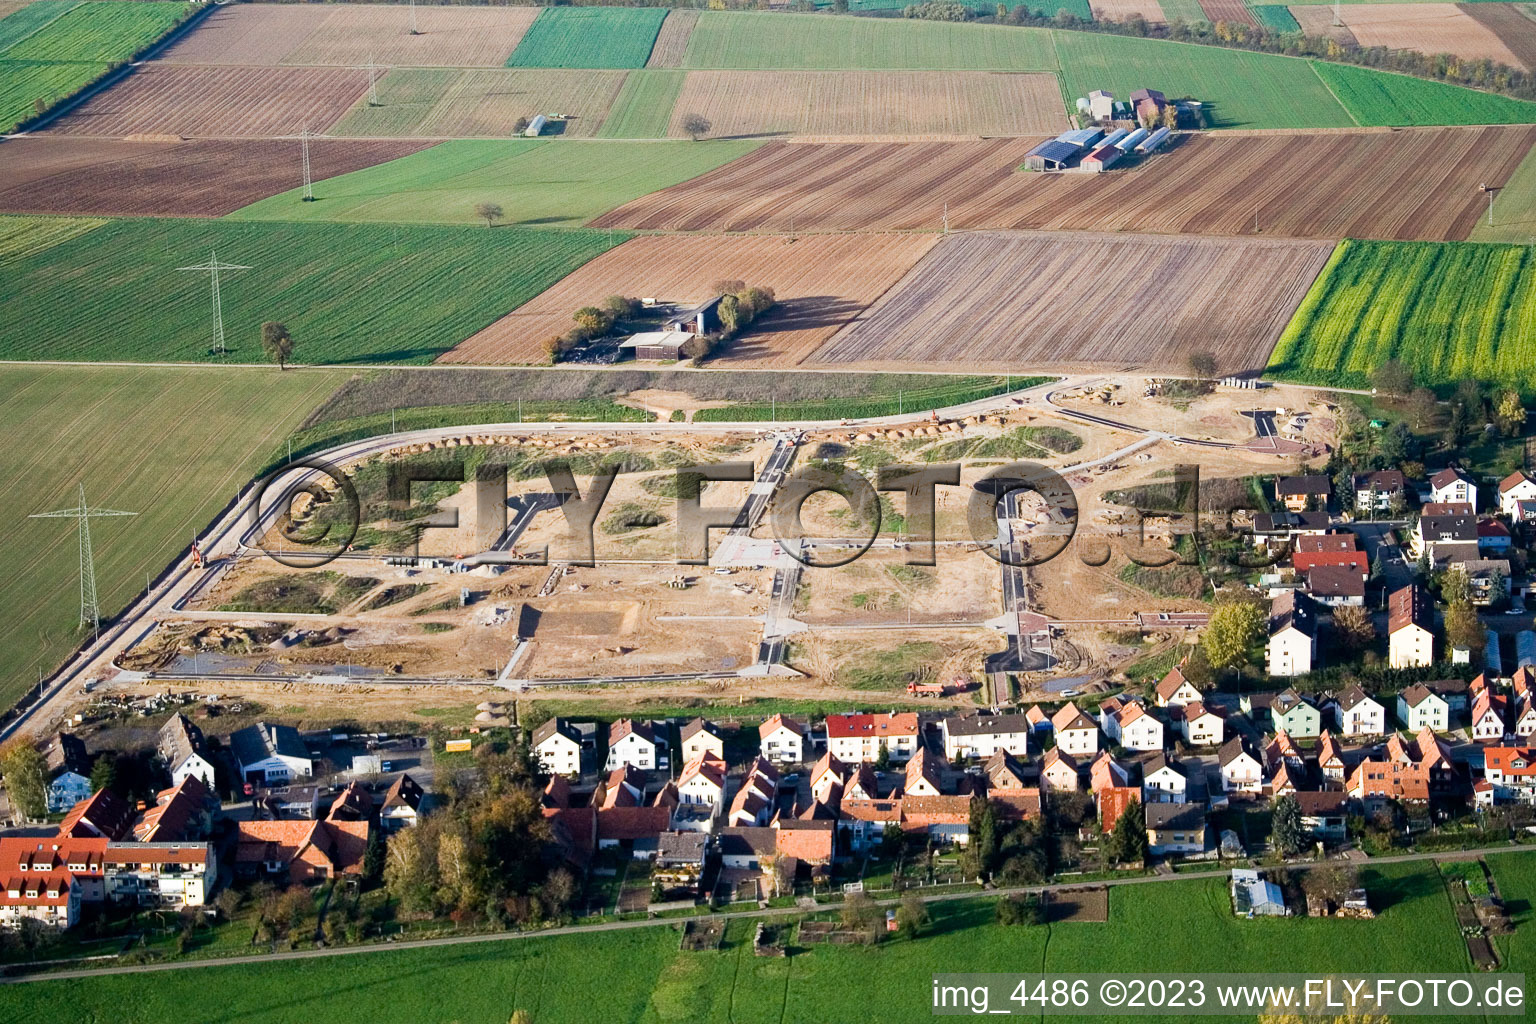 Höhenweg new development area in Kandel in the state Rhineland-Palatinate, Germany